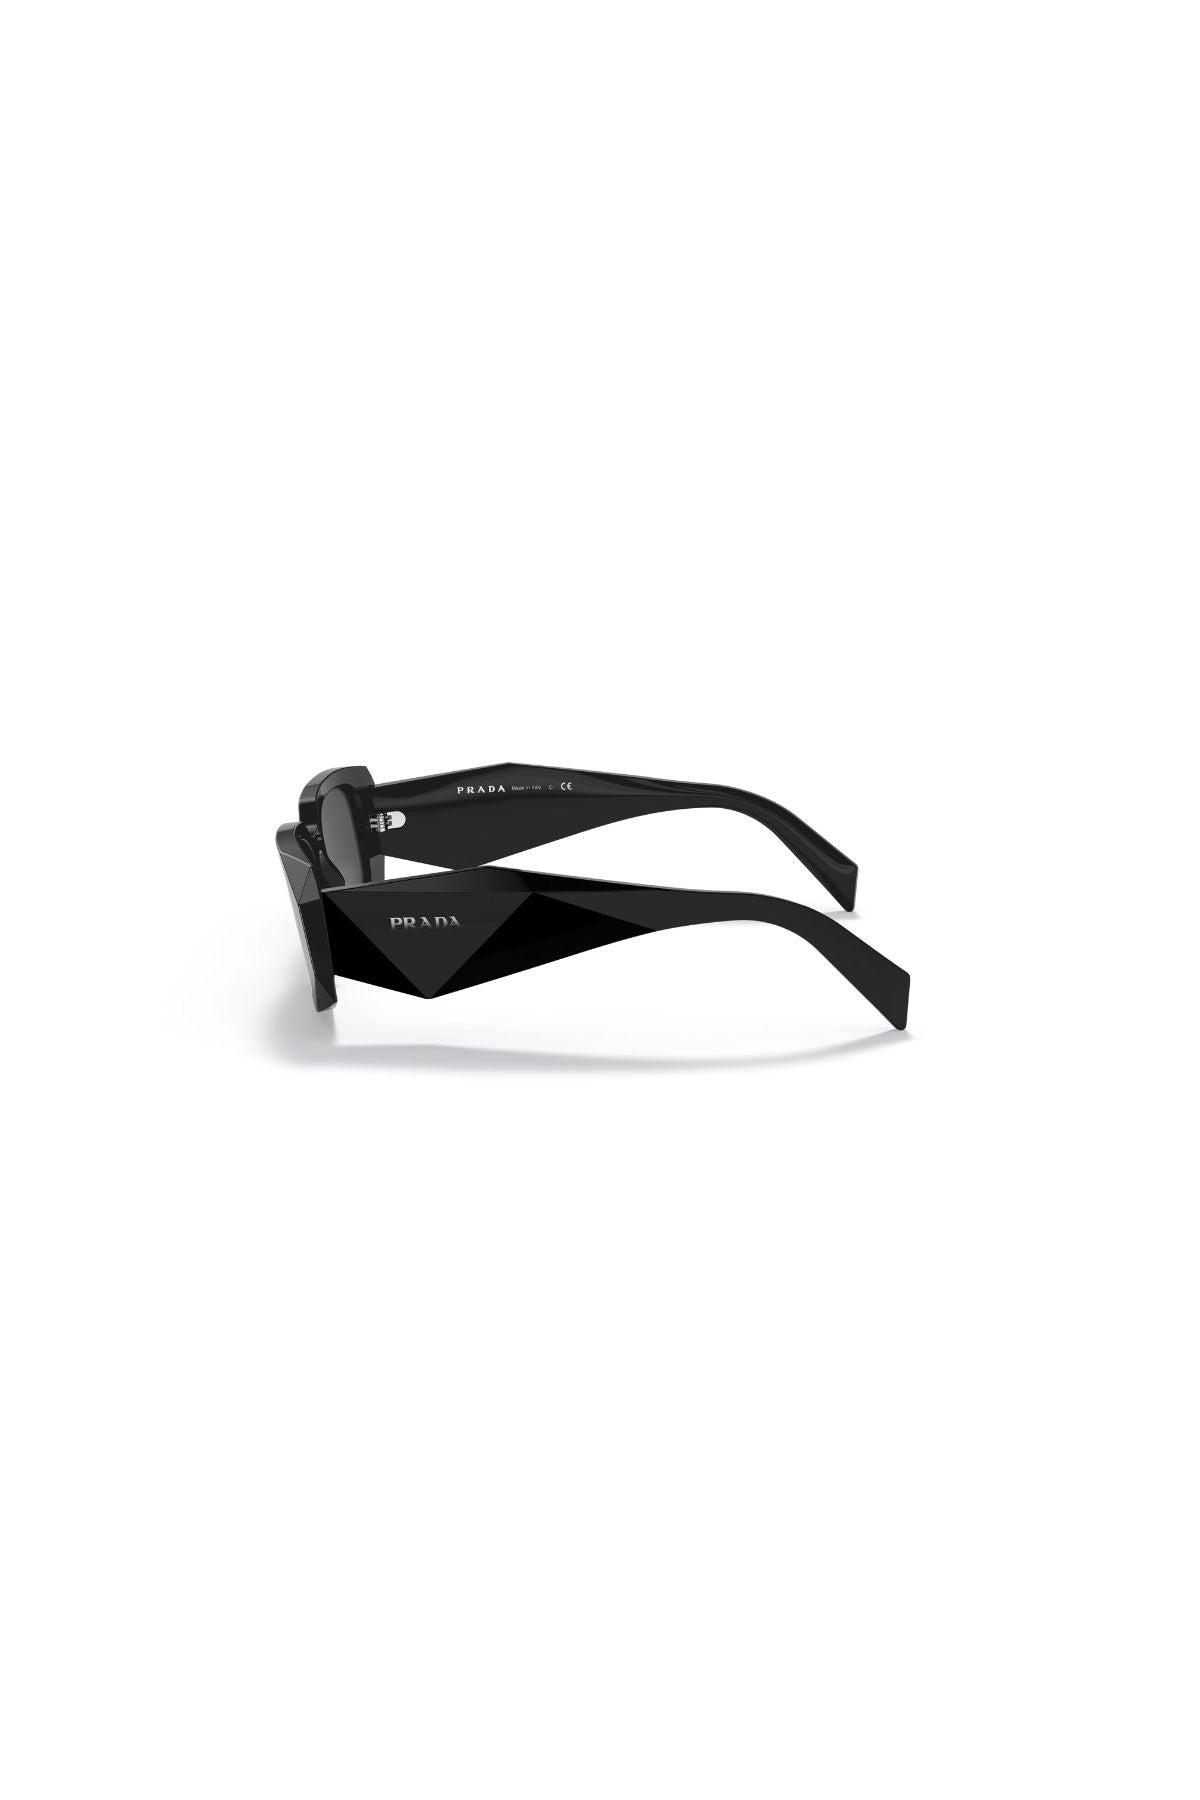 Prada Iconic Rectangle Sunglasses - Black/ Dark Grey